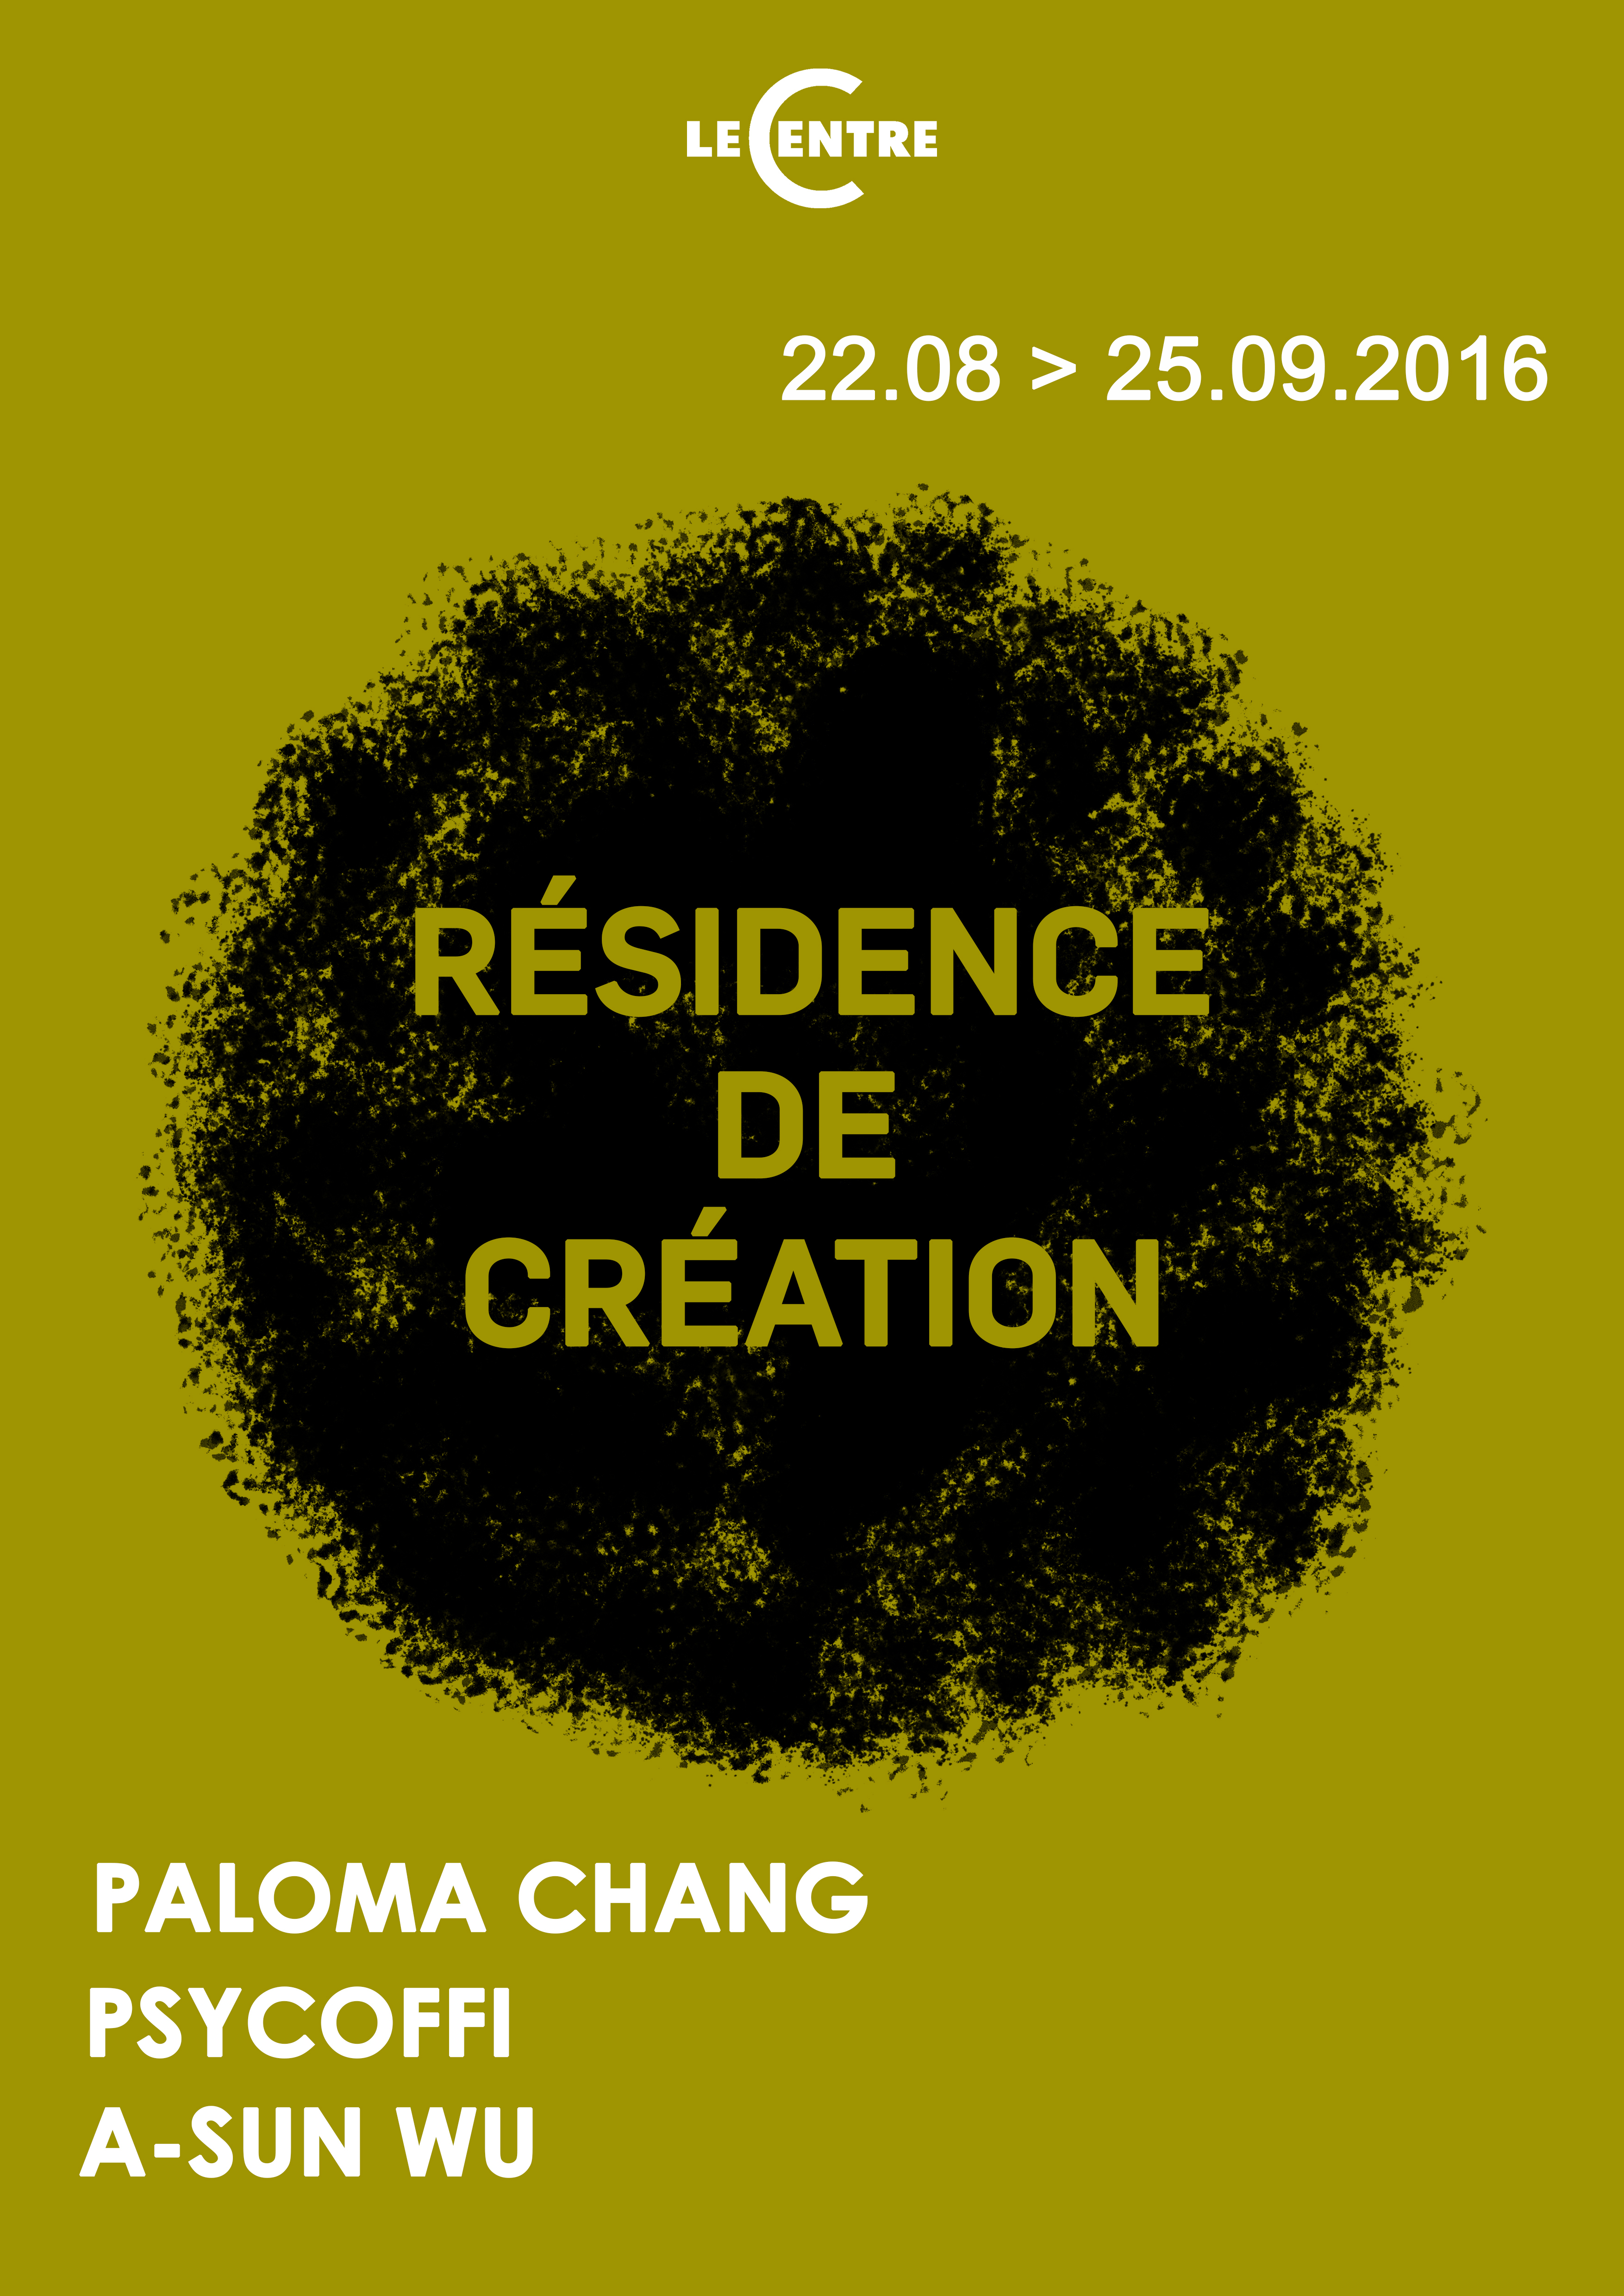 Paloma Chang, Psycoffi & A-sun Wu